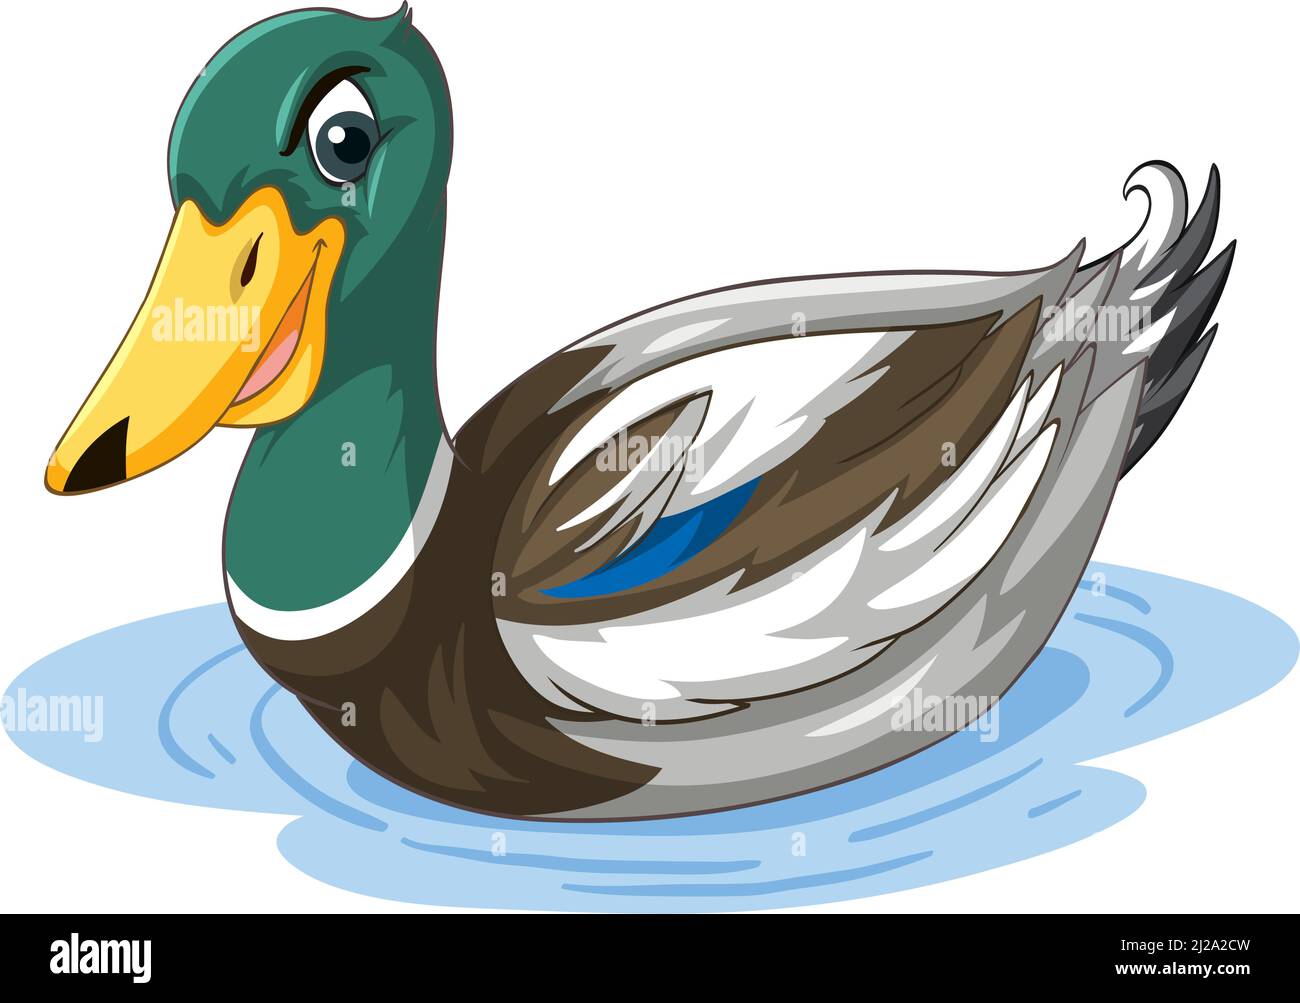 Duck with green head cartoon character illustration Stock Vector